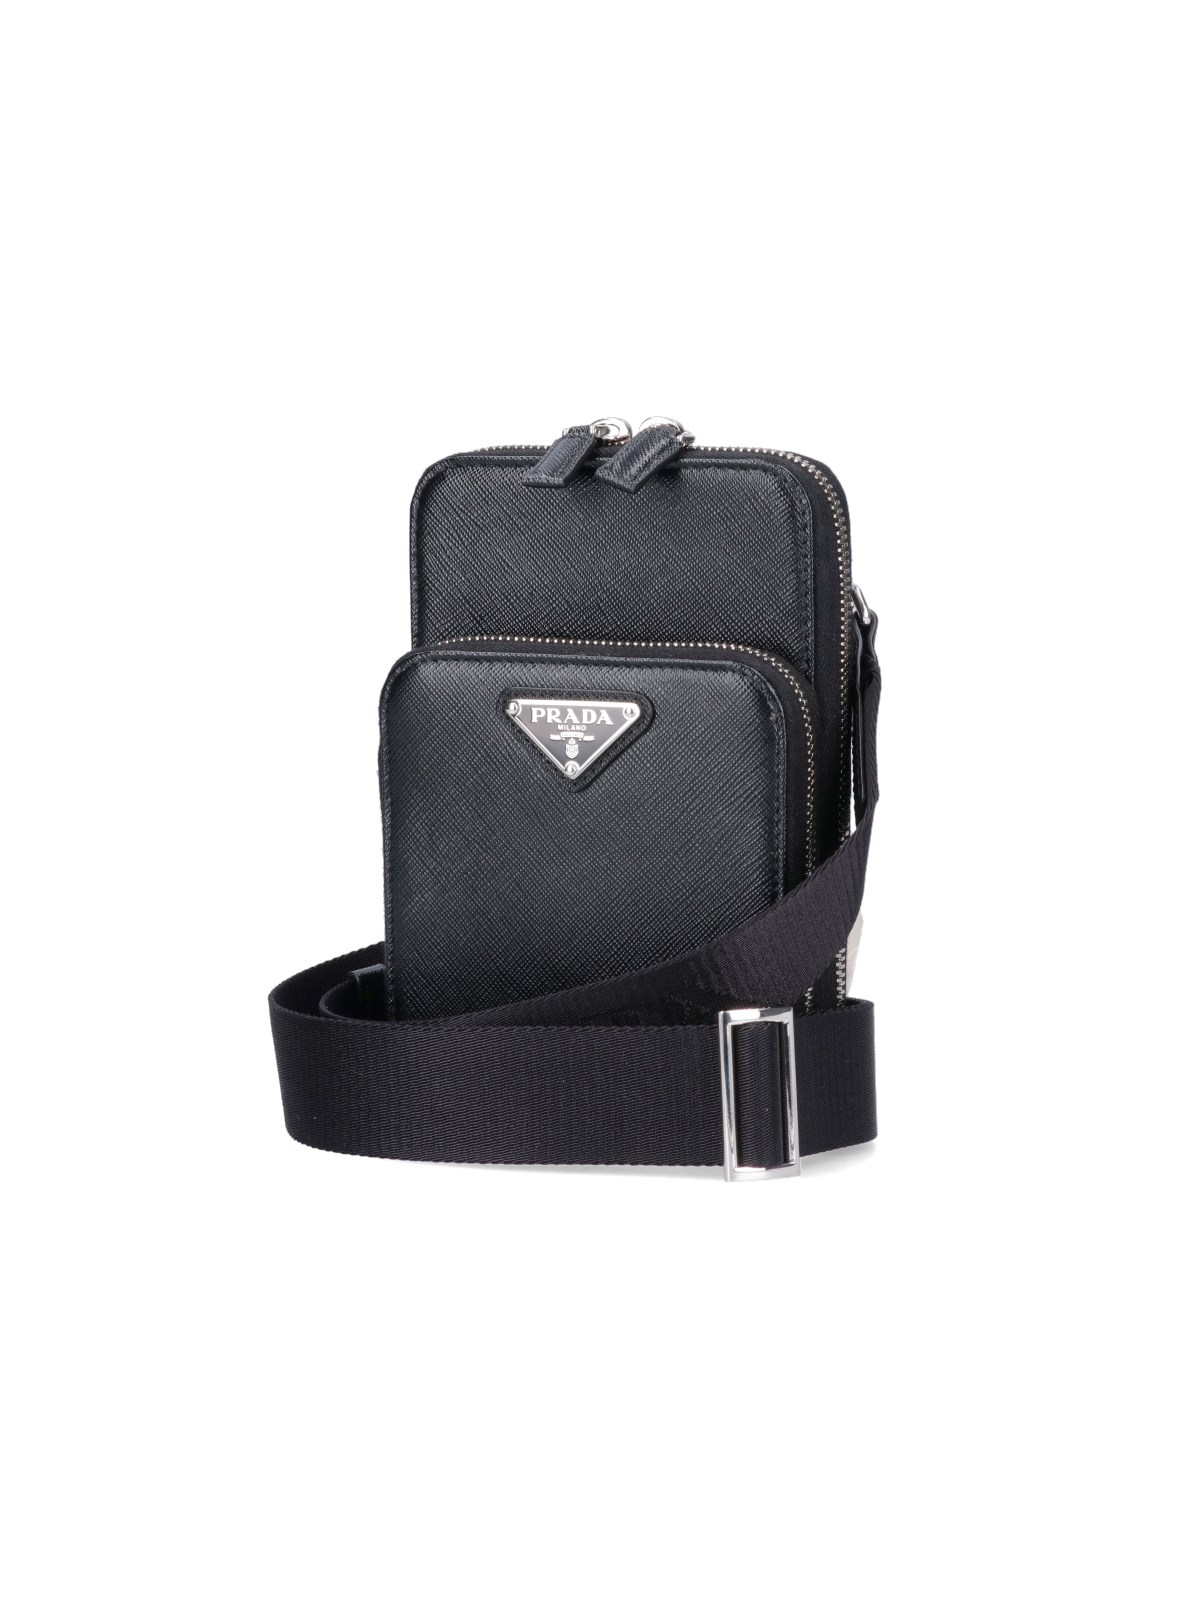 Prada Shoulder strap smartphone case available on SUGAR - 99469